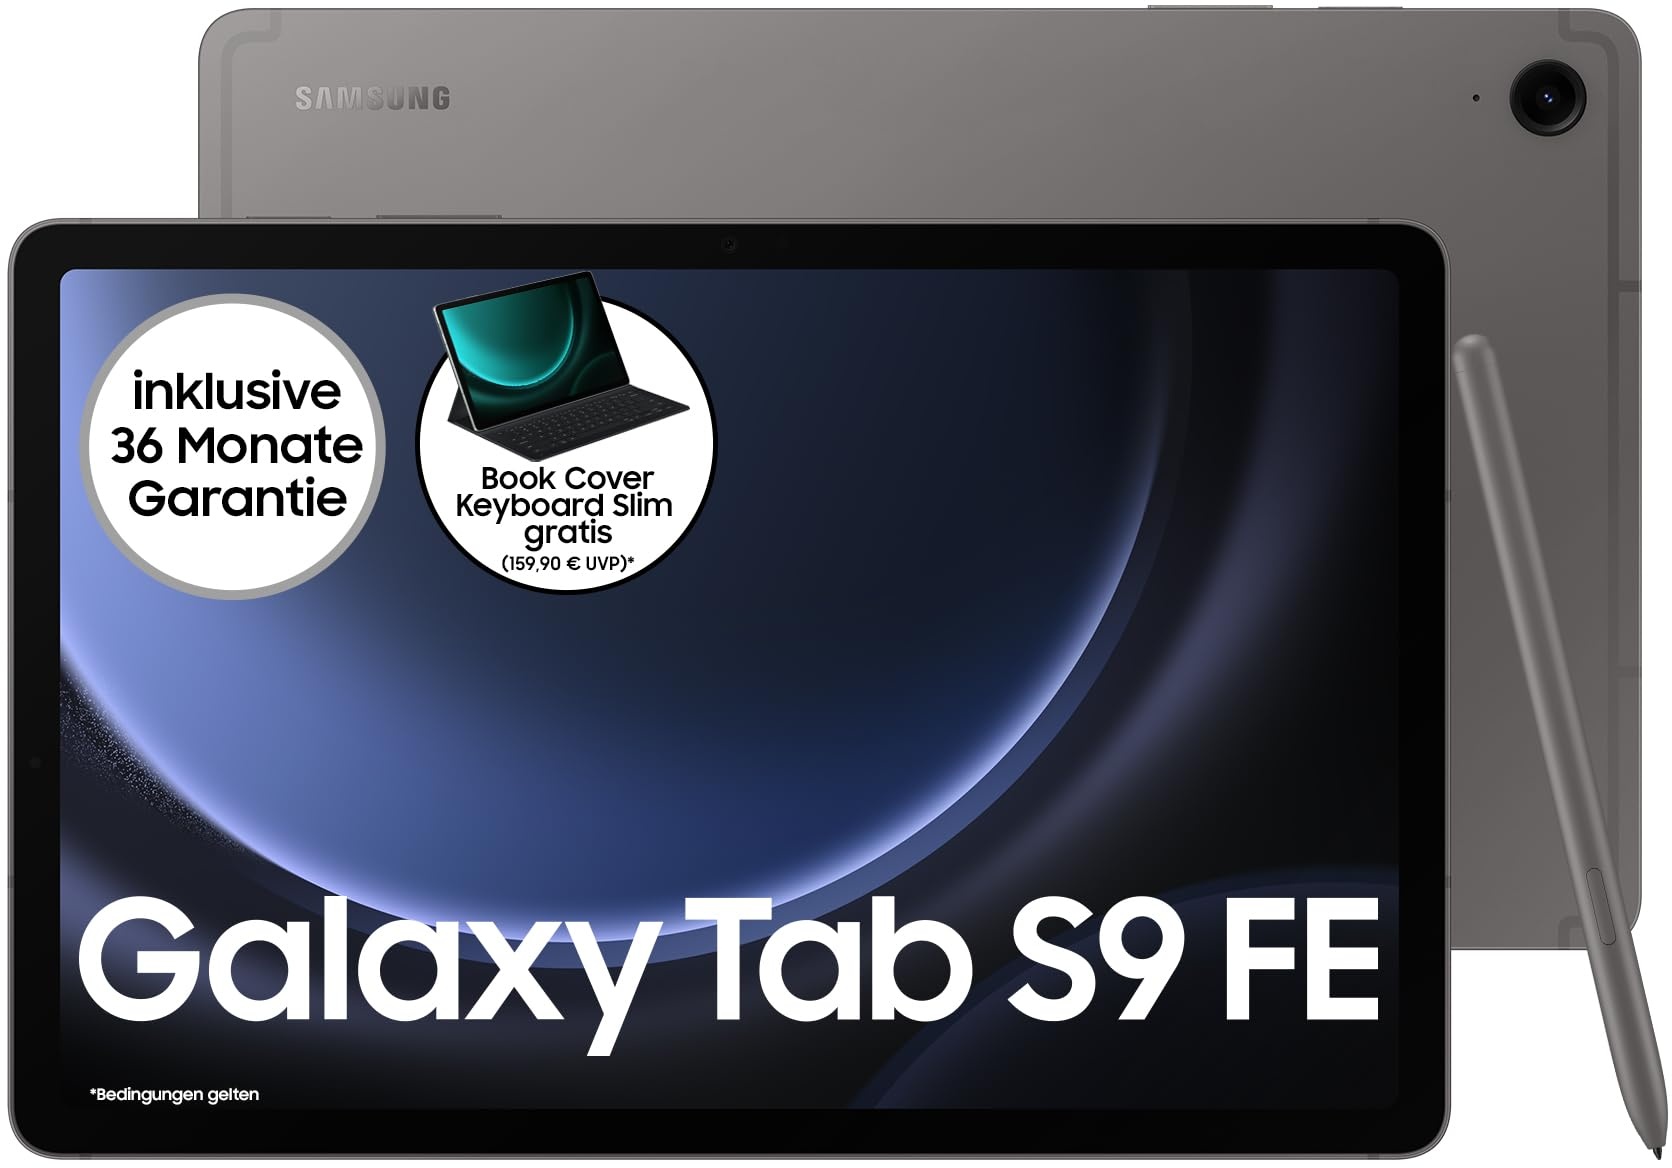 Samsung Galaxy Tab S9 FE Android-Tablet, 27,7 cm / 10,9 Zoll Display, 128 GB Speicher, Mit Stift (S Pen), Lange Akkulaufzeit, WiFi, Grau, Inkl. 36 Monate Herstellergarantie [Exklusiv bei Amazon]